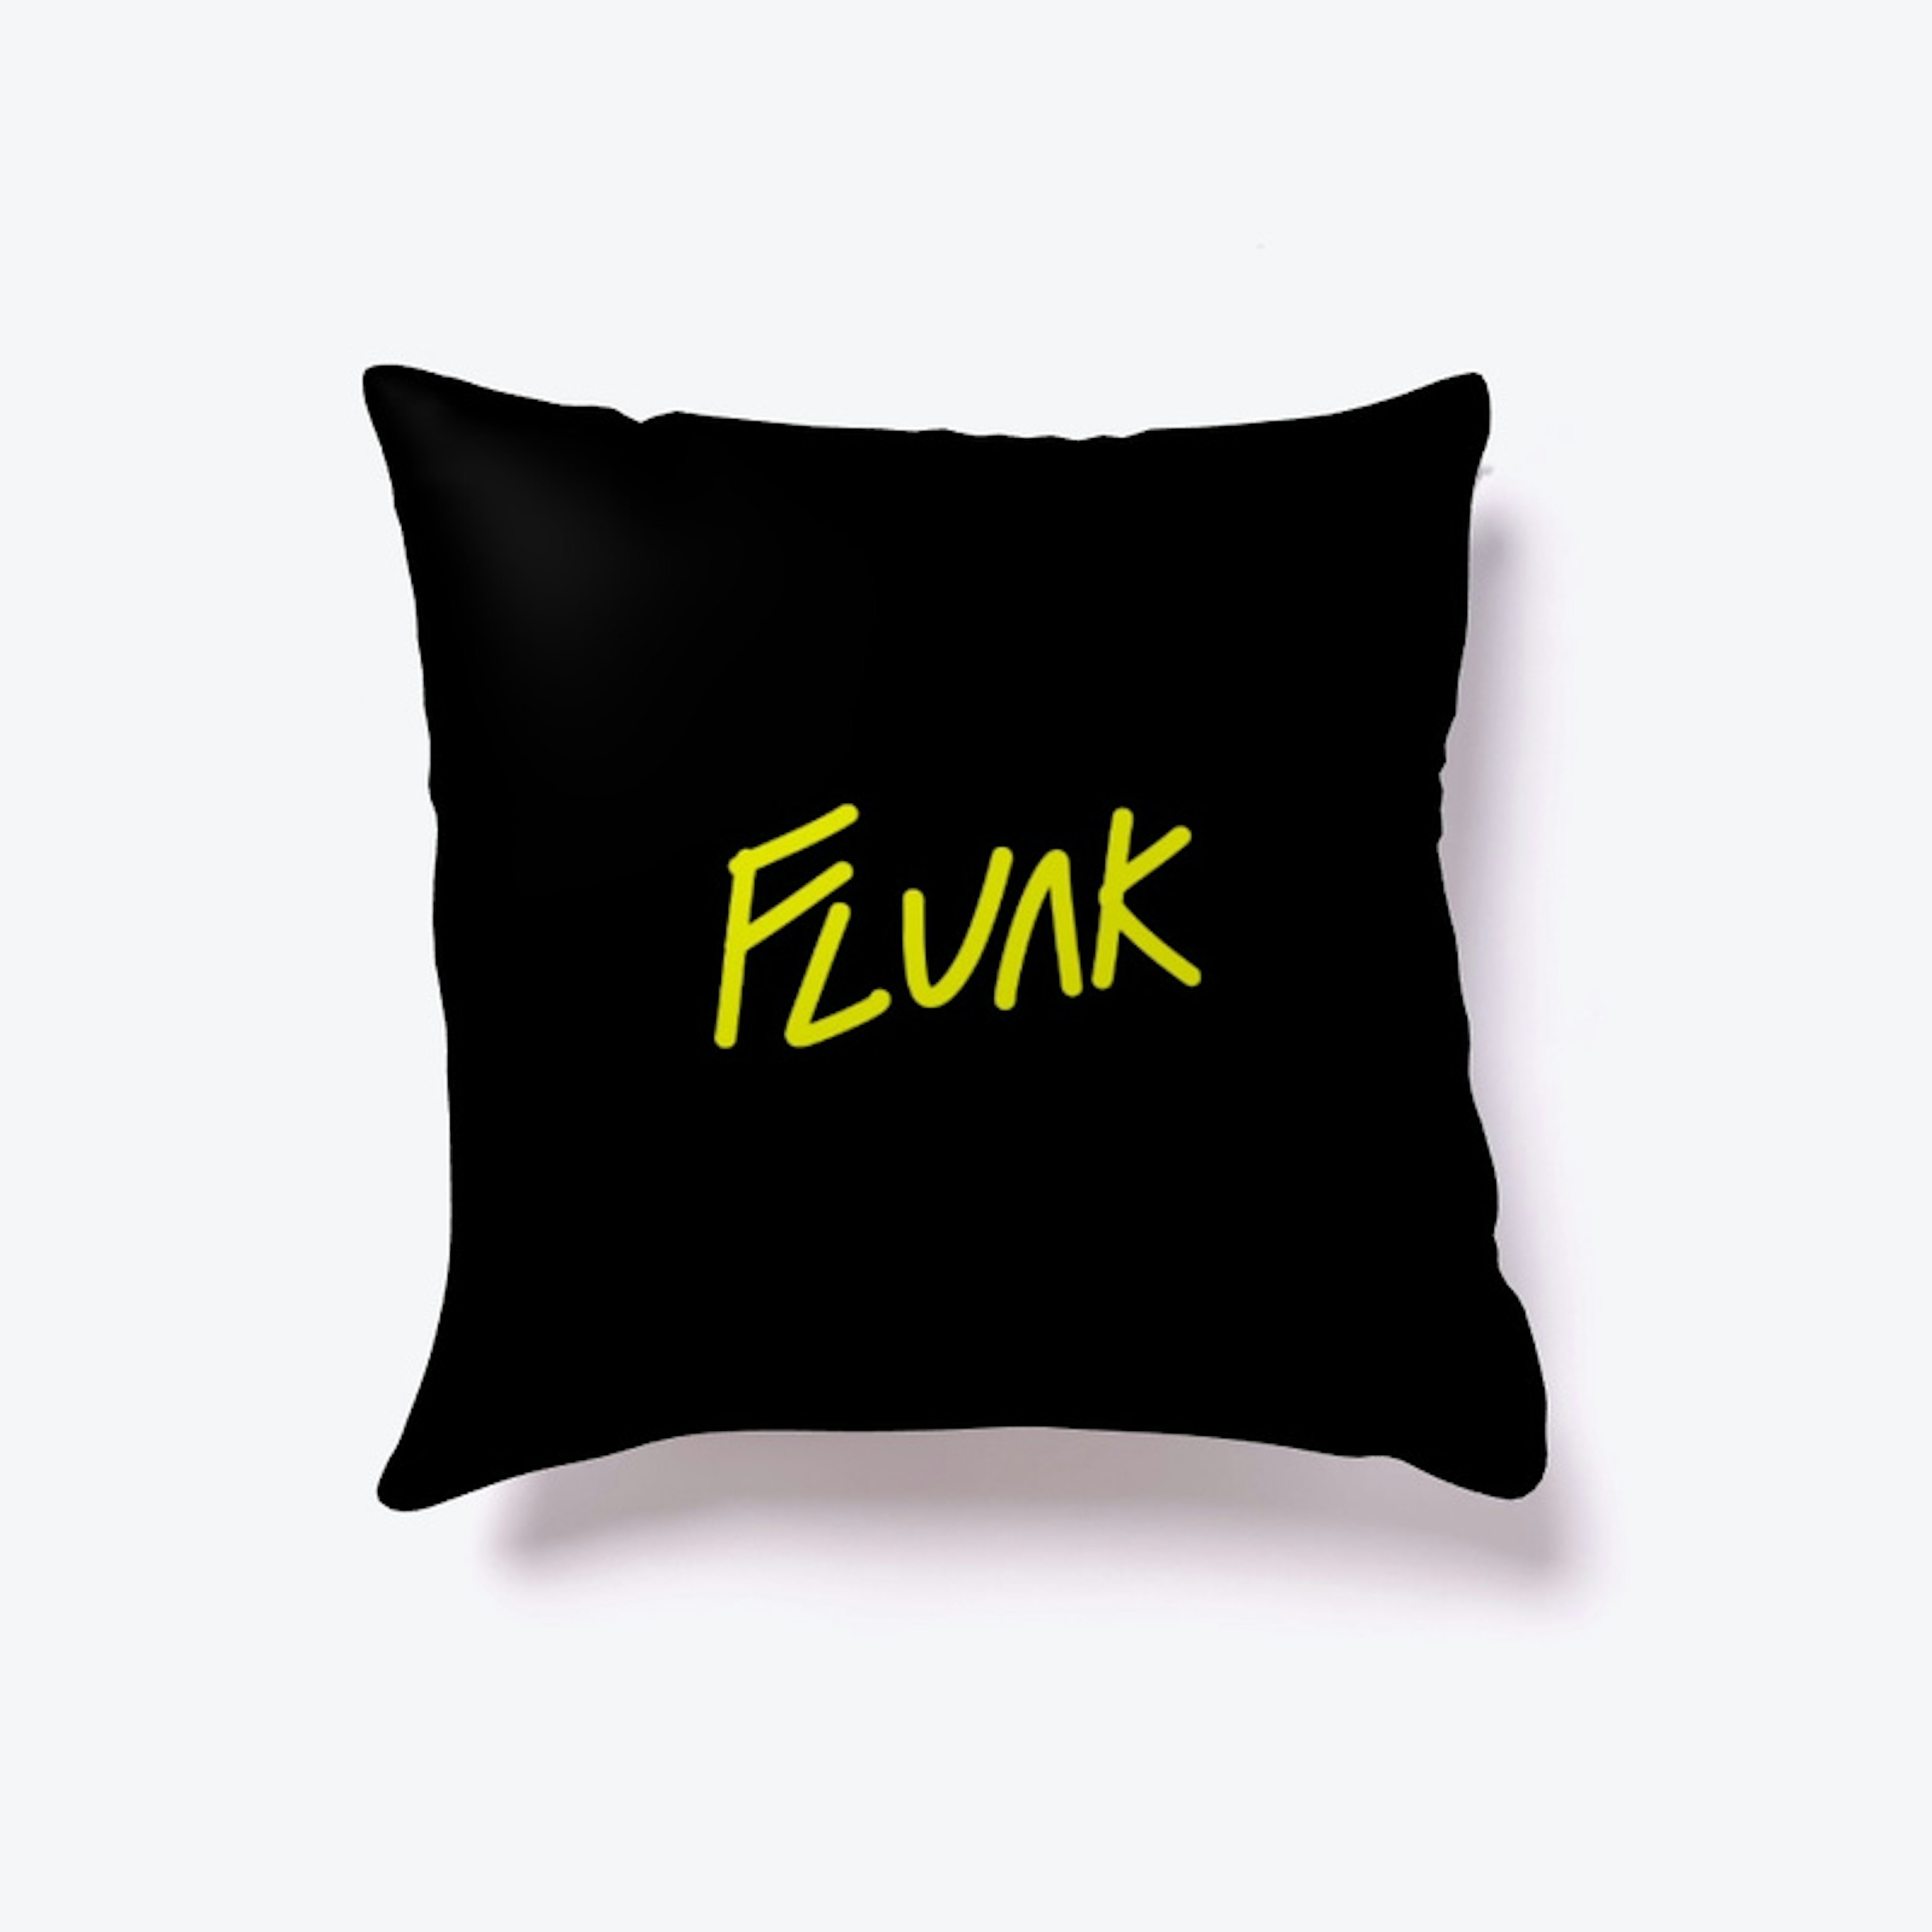 Flunk logo